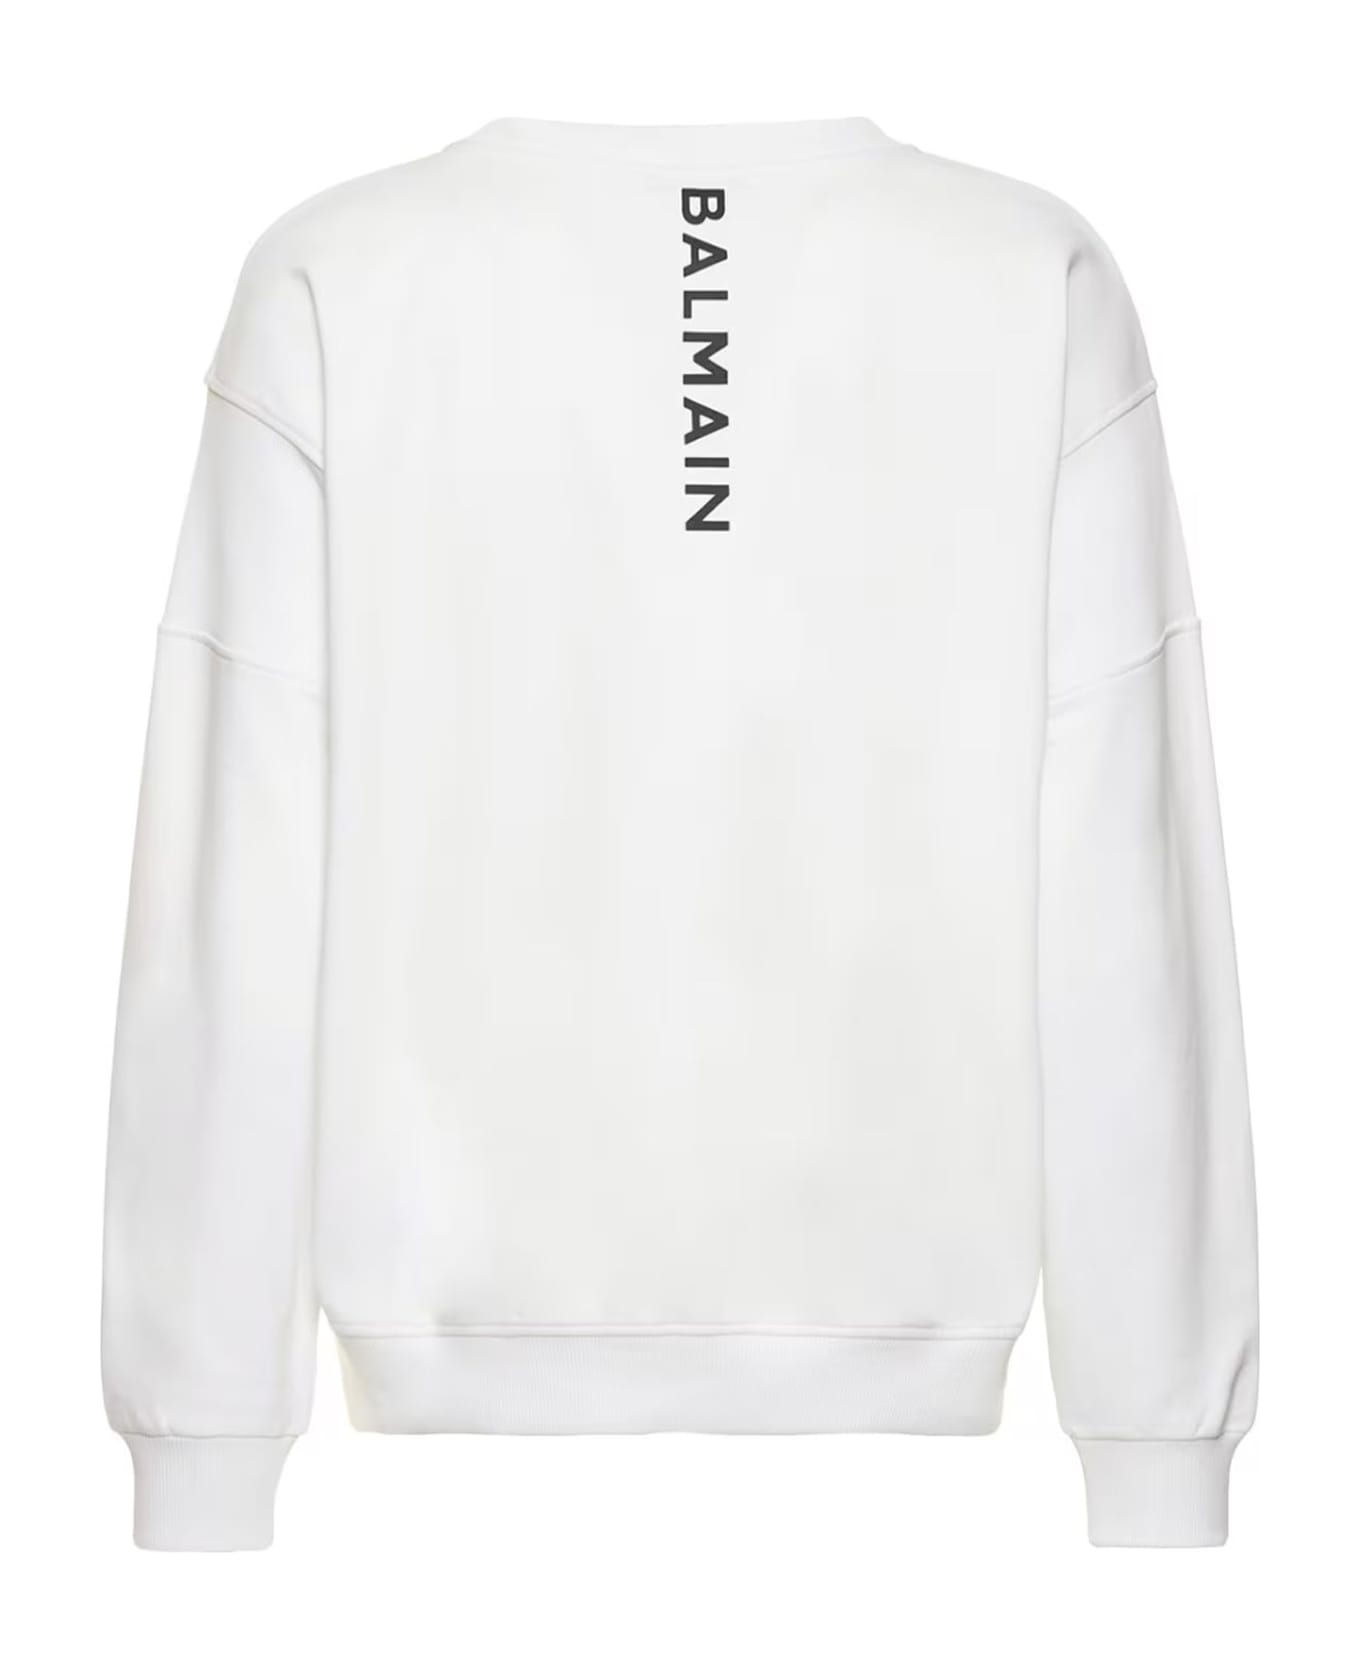 Balmain Logo Sweartshirt - White